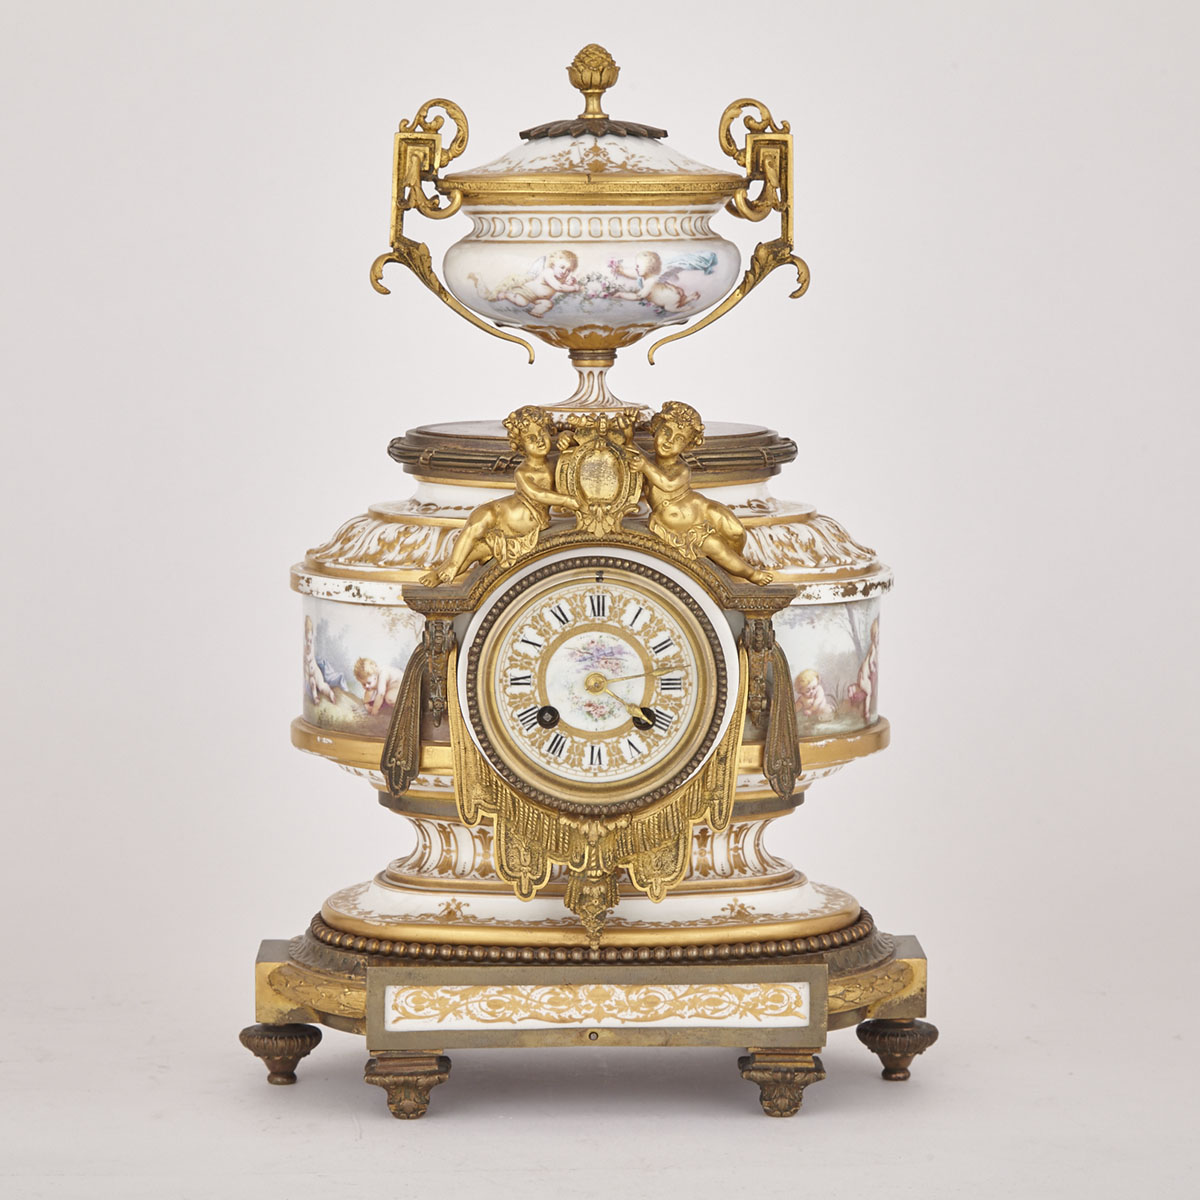 Napoleon III Ormolu Mounted Sevres Style Porcelain Mantel Clock Retailed by Tiffany & Company, 2nd half, 19th century